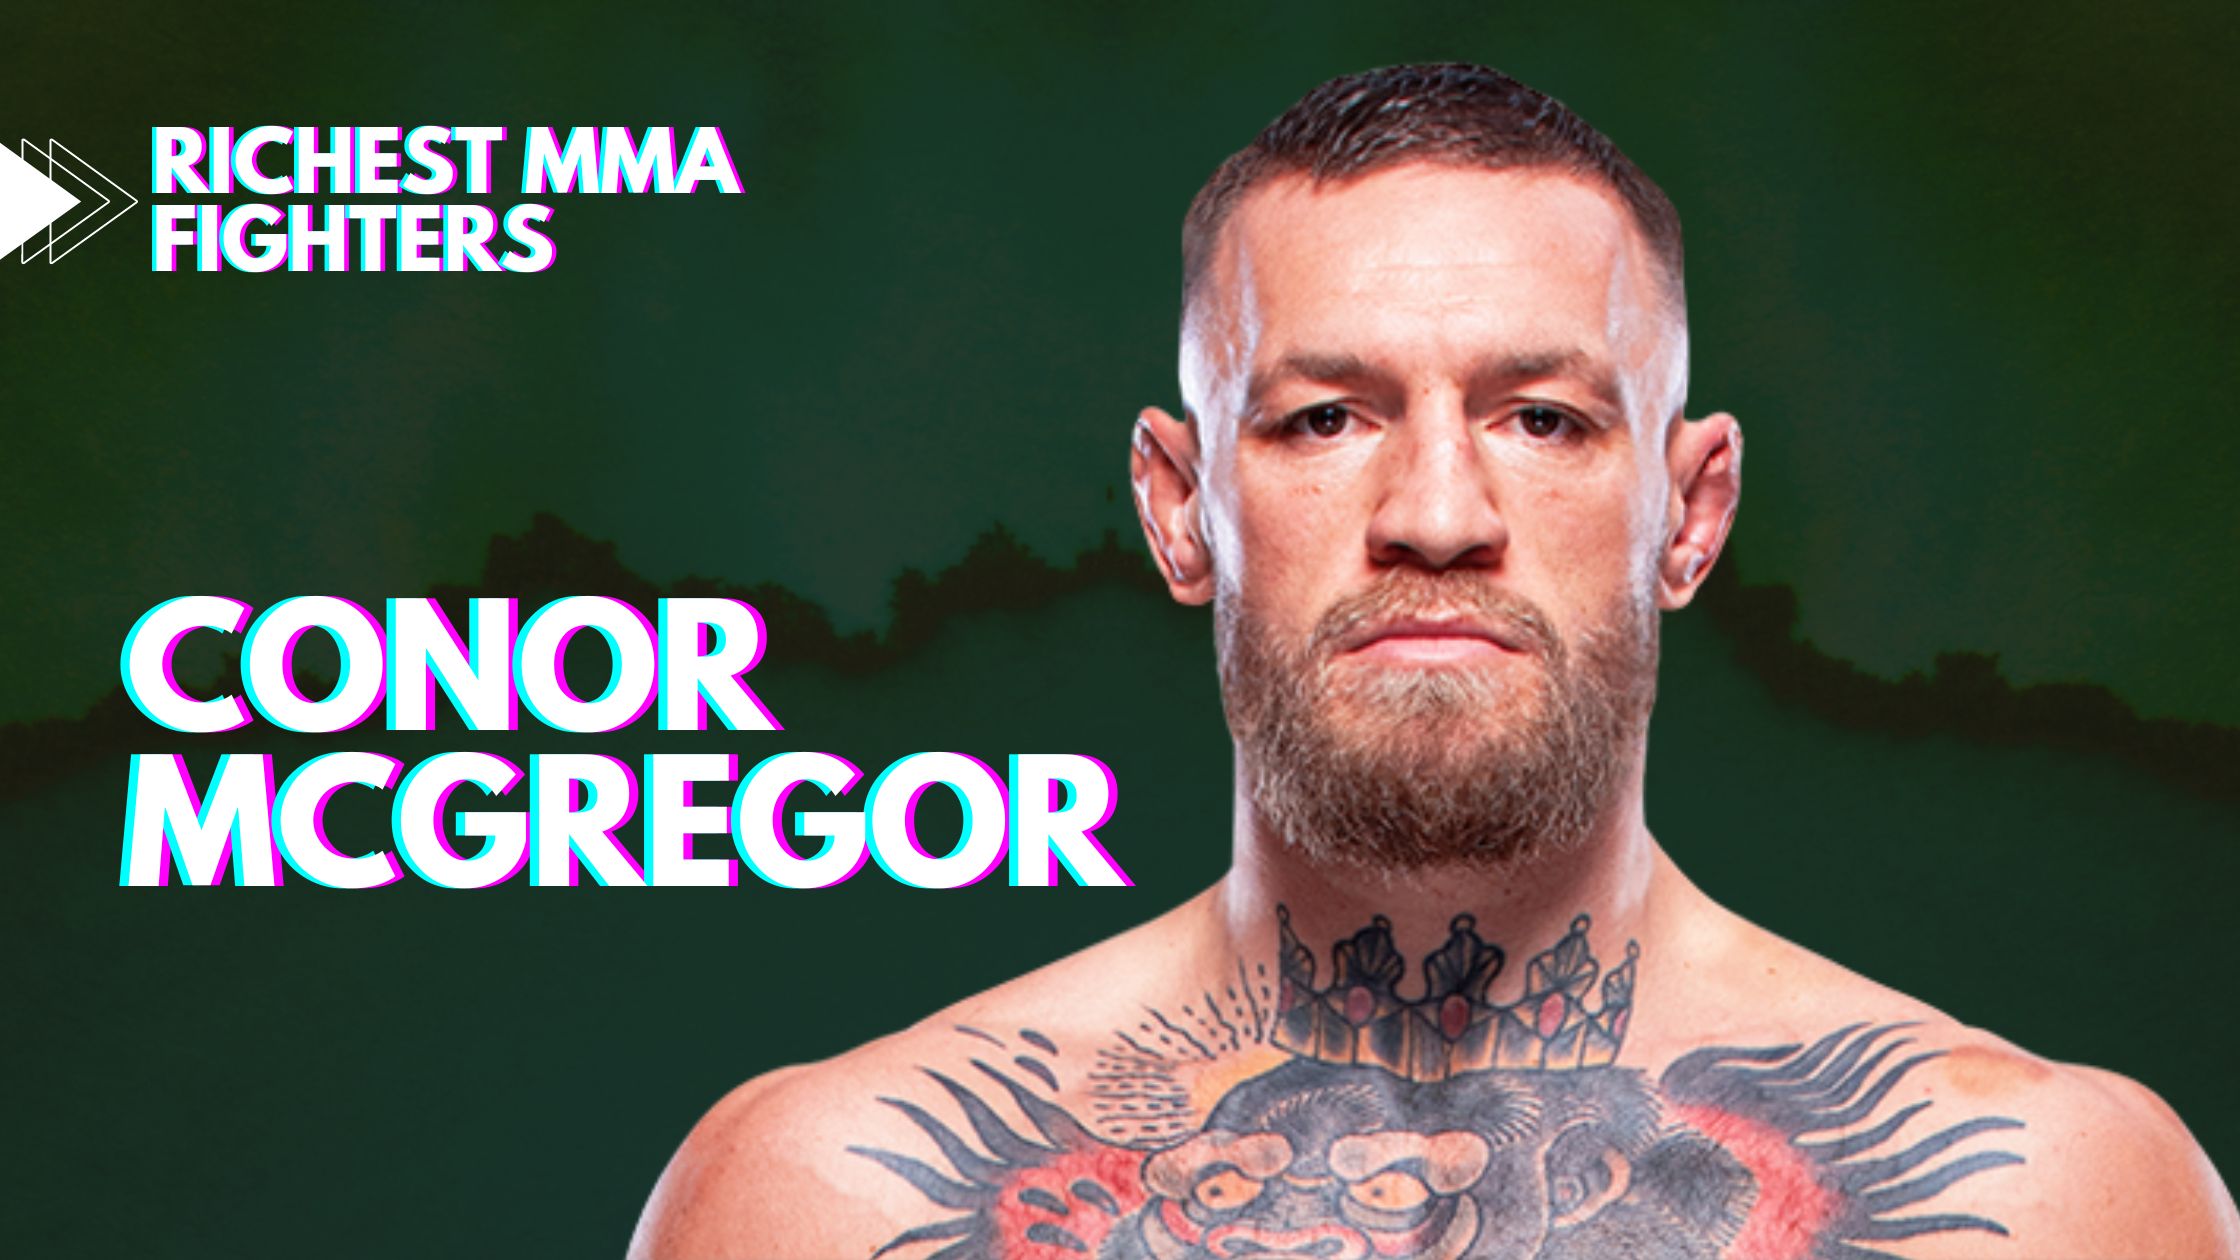  Conor McGregor - Richest MMA fighters